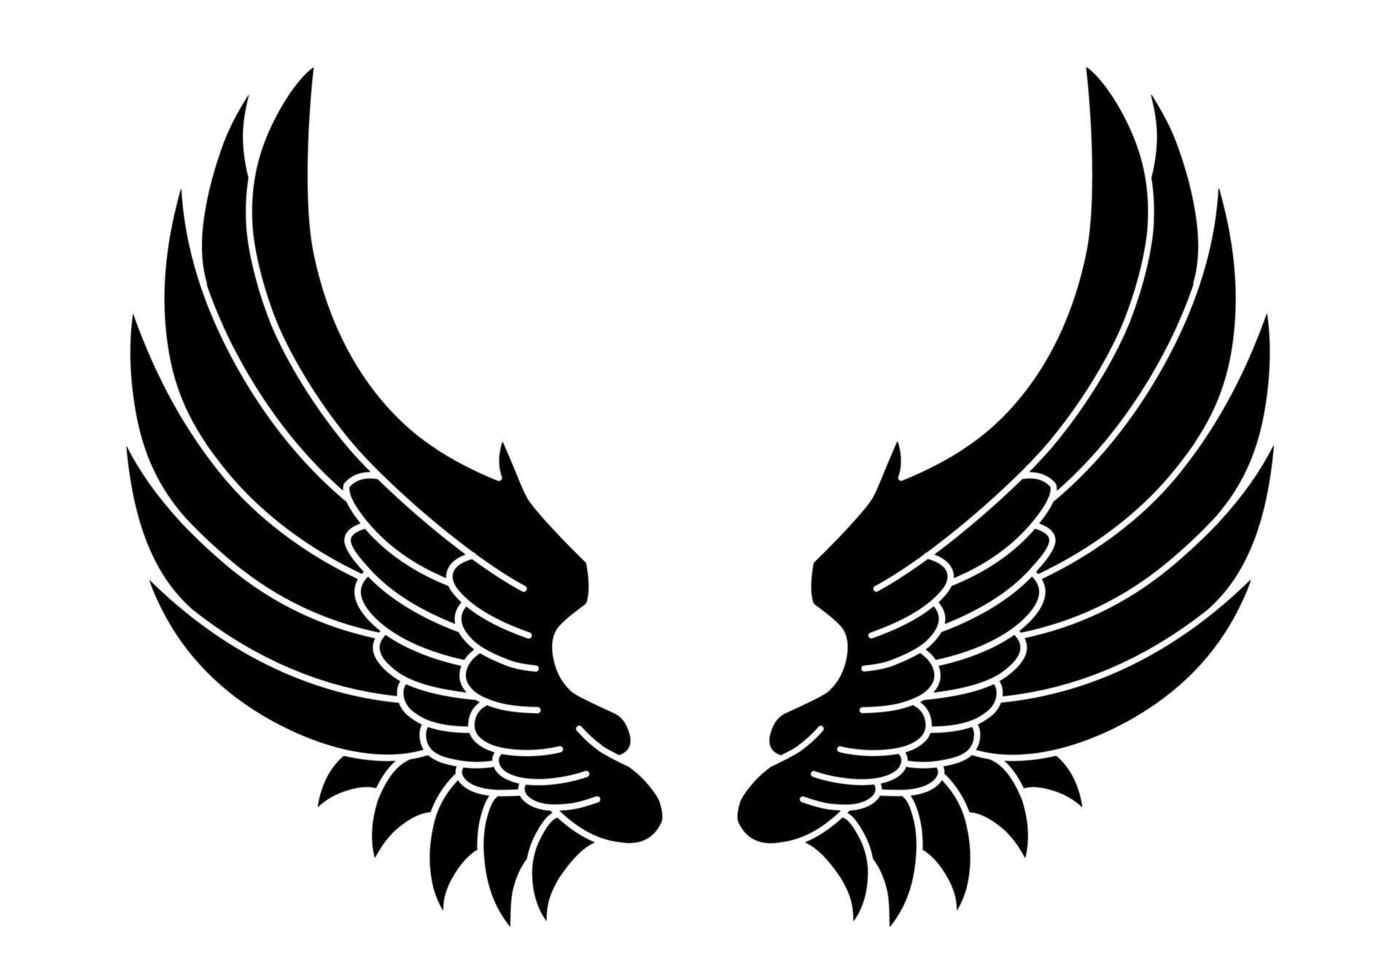 Tribal angel wings tattoo illustration vector